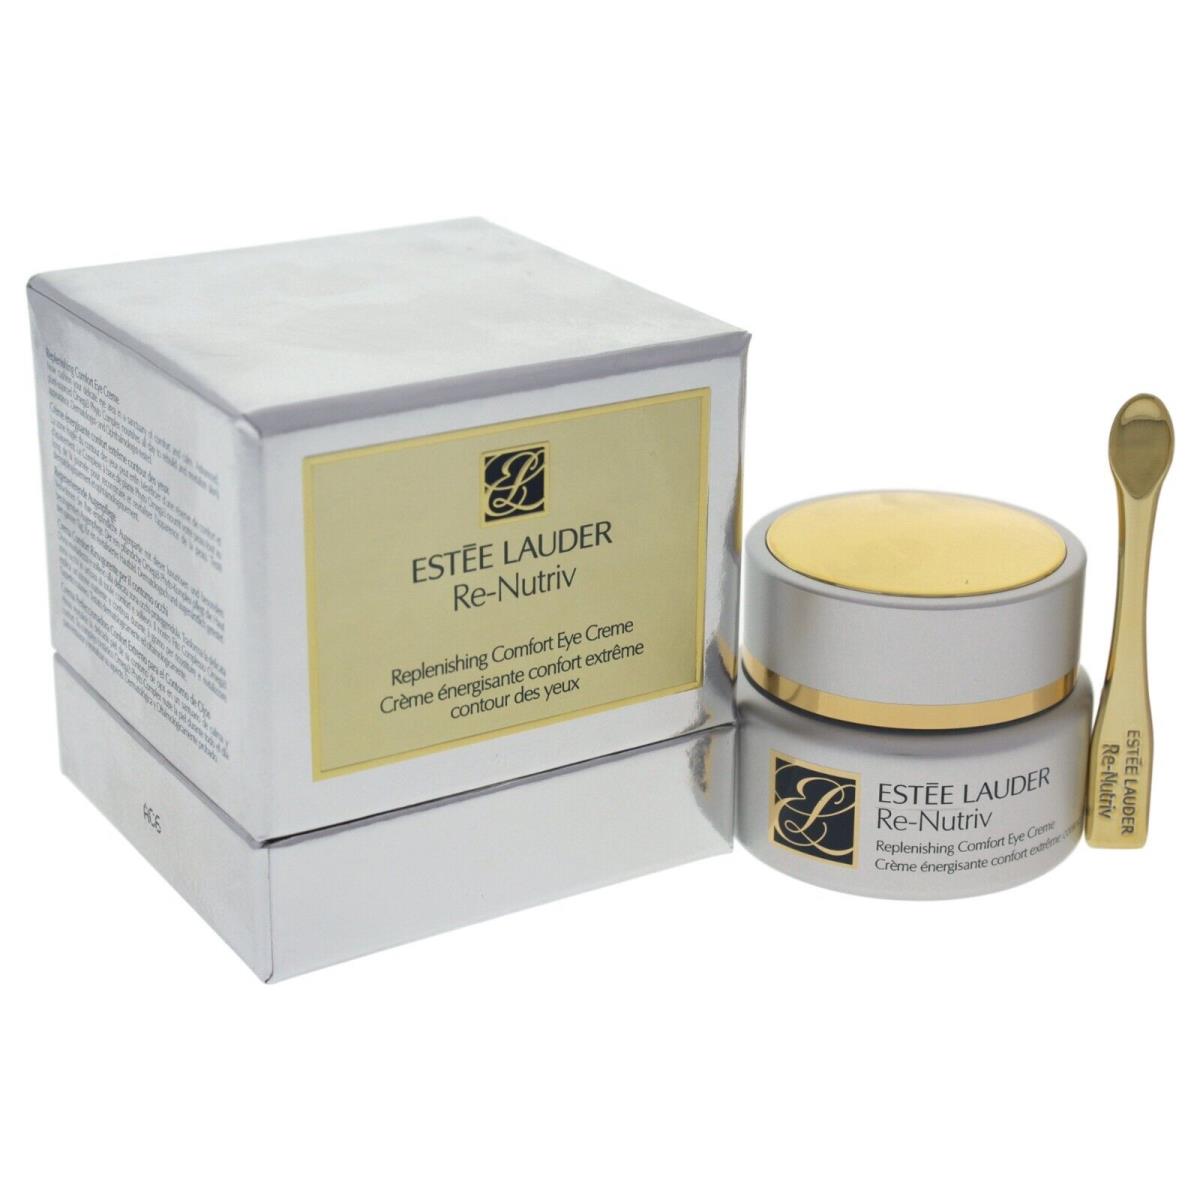 Estee Lauder Re-nutriv Replenishing Comfort Eye Creme 0.5 oz